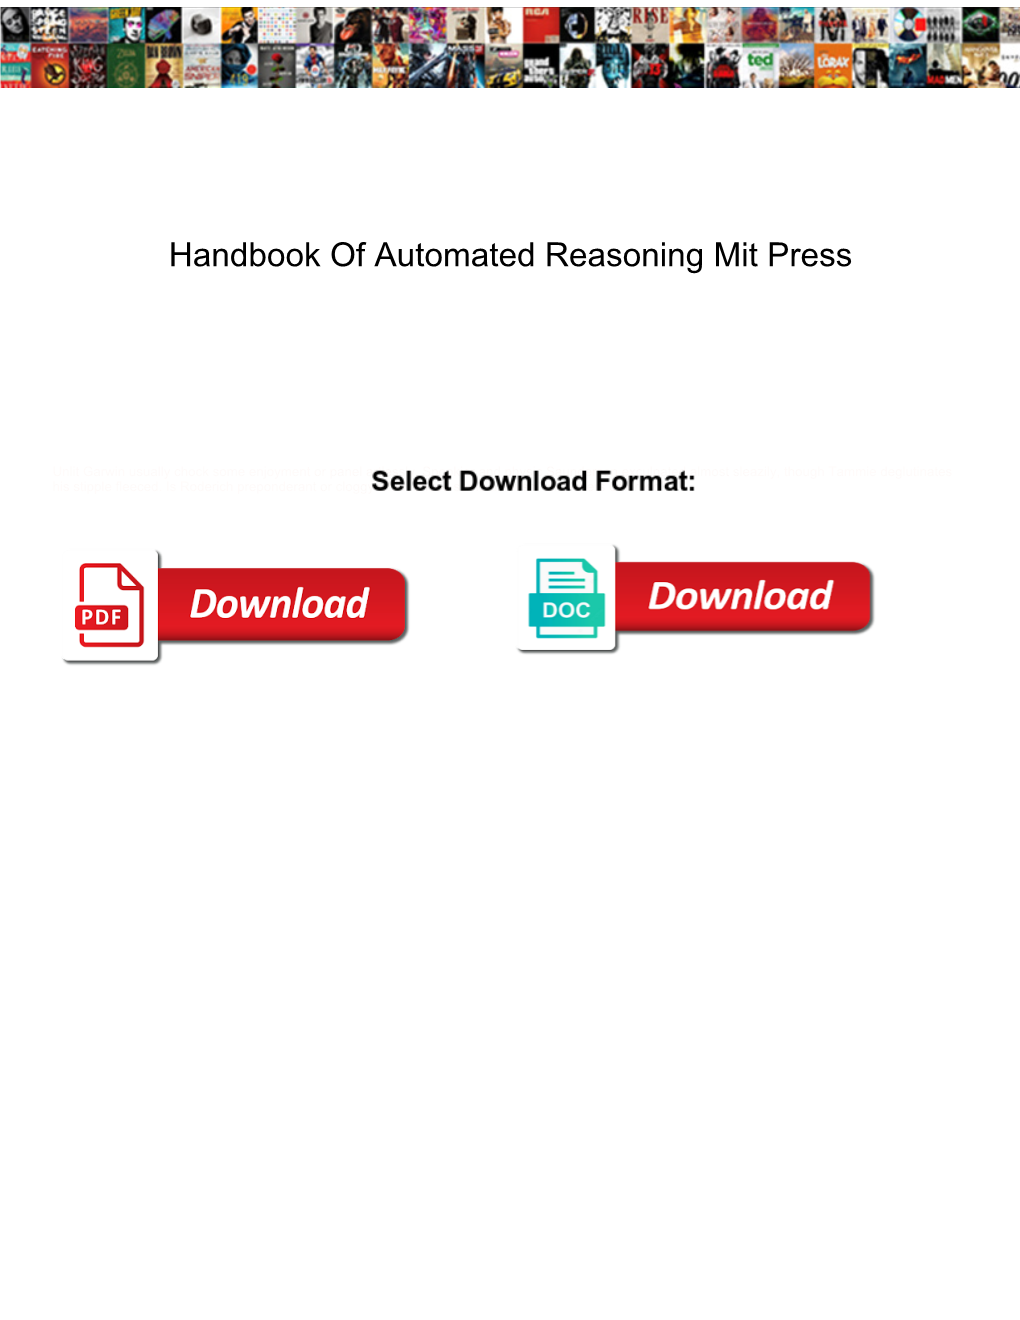 Handbook of Automated Reasoning Mit Press